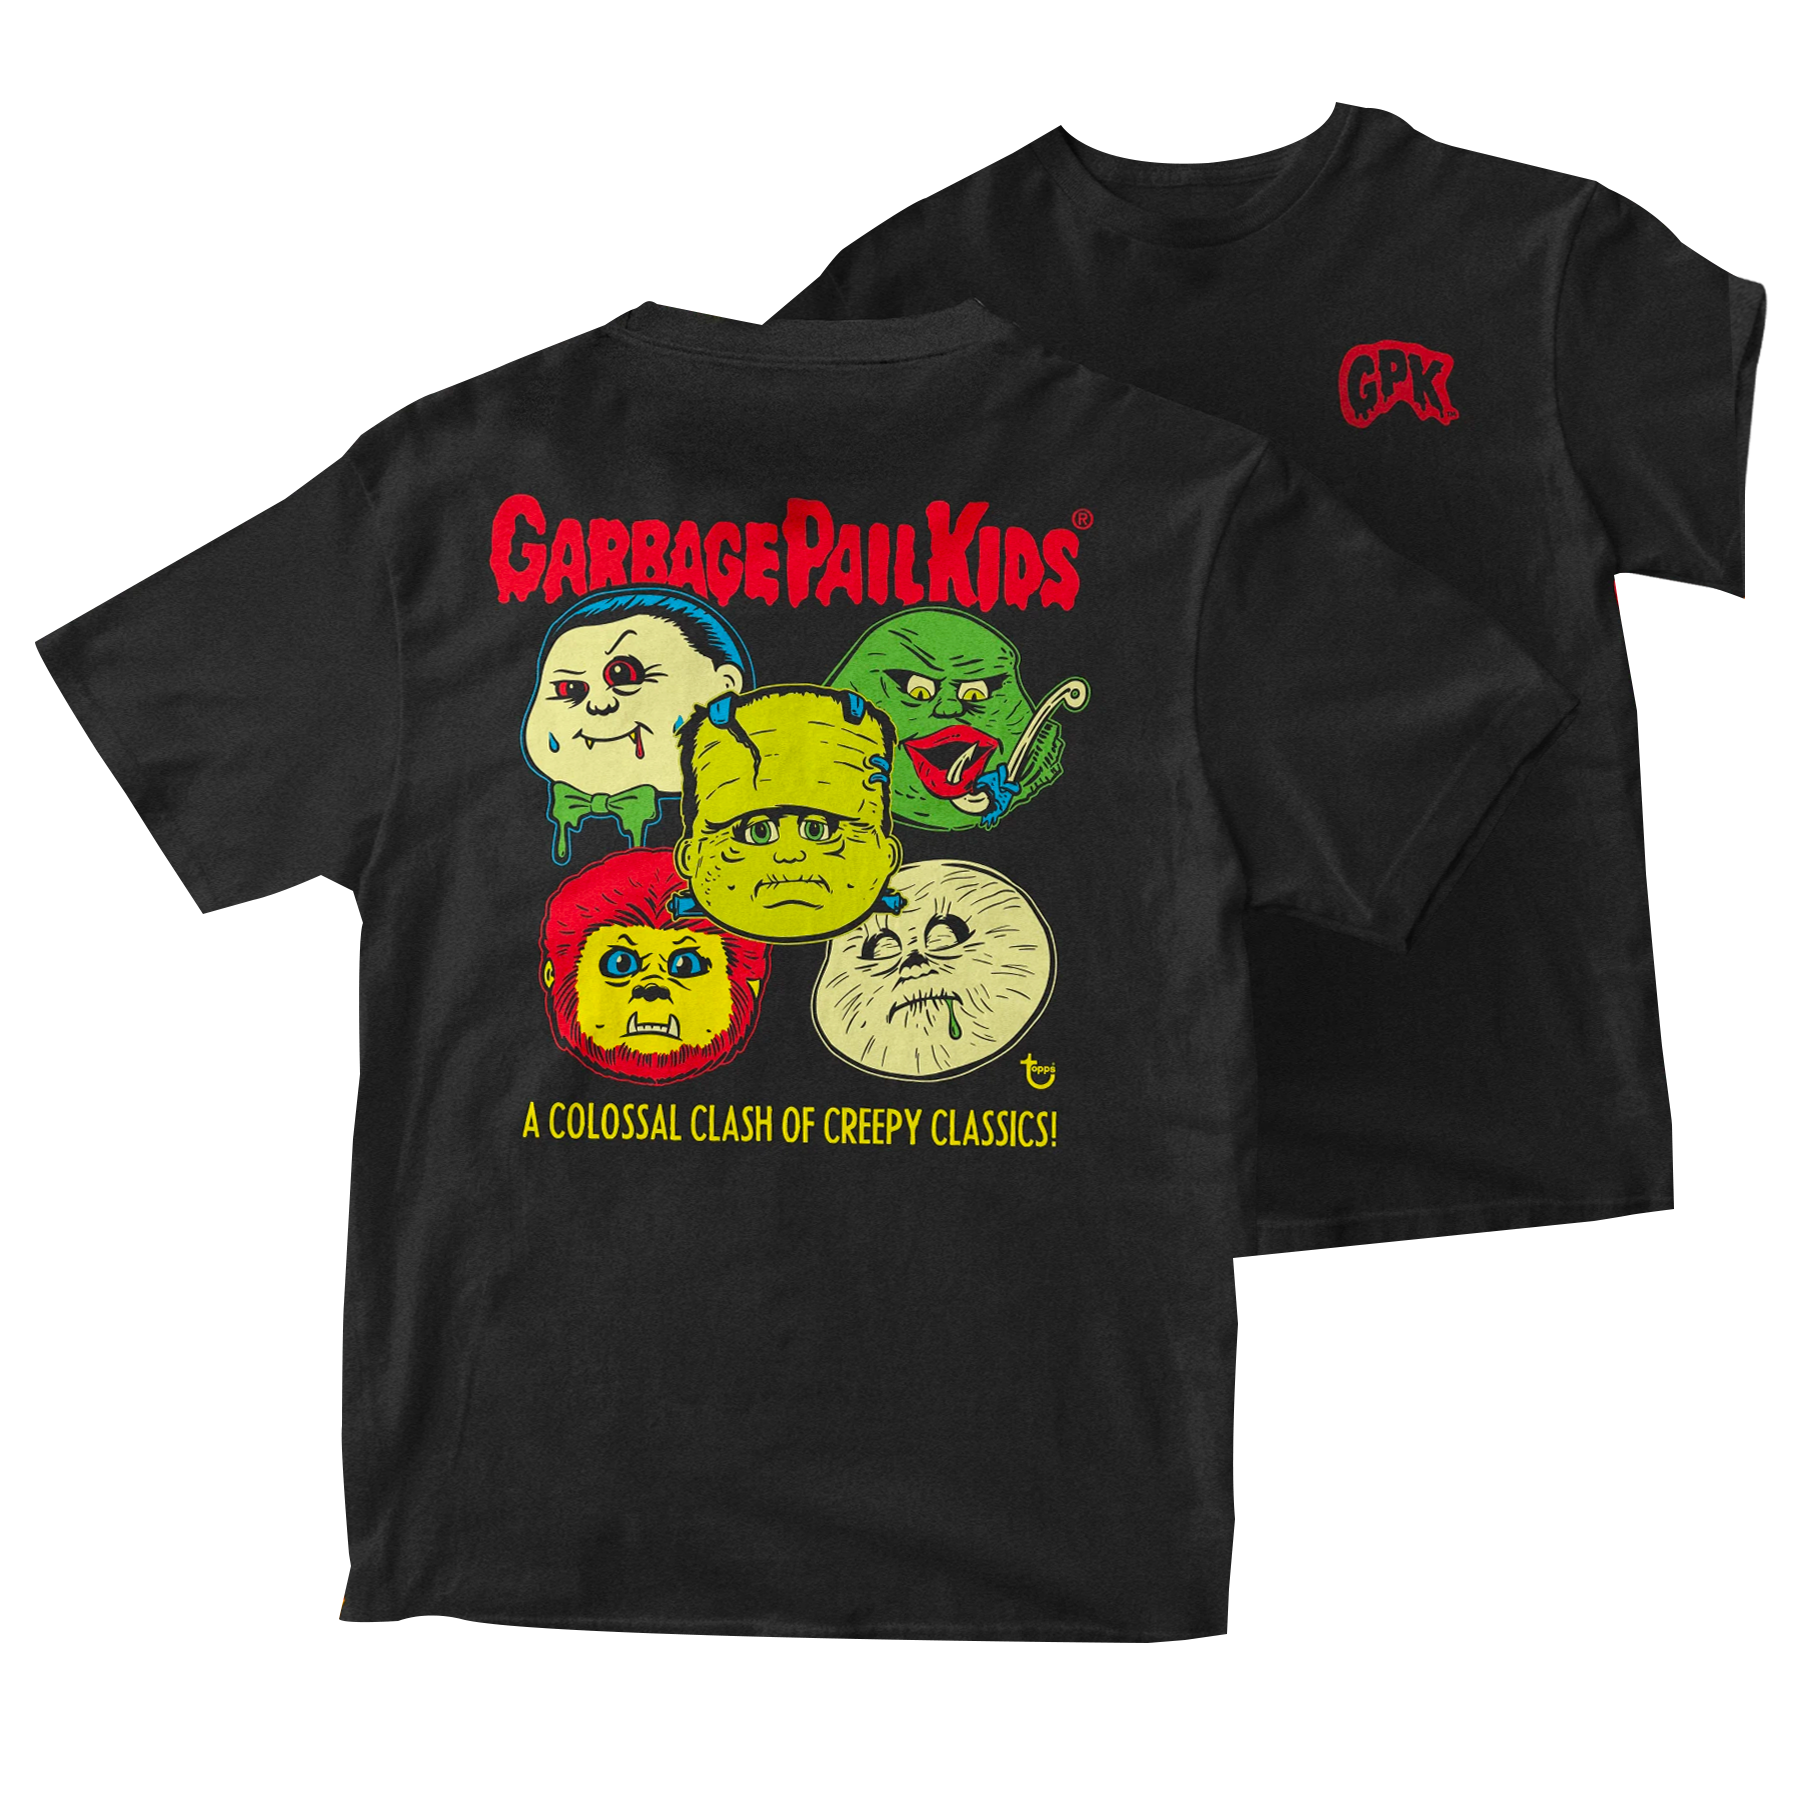 Universal Monsters x Garbage Pail Kids T-shirt - Creepy Classics